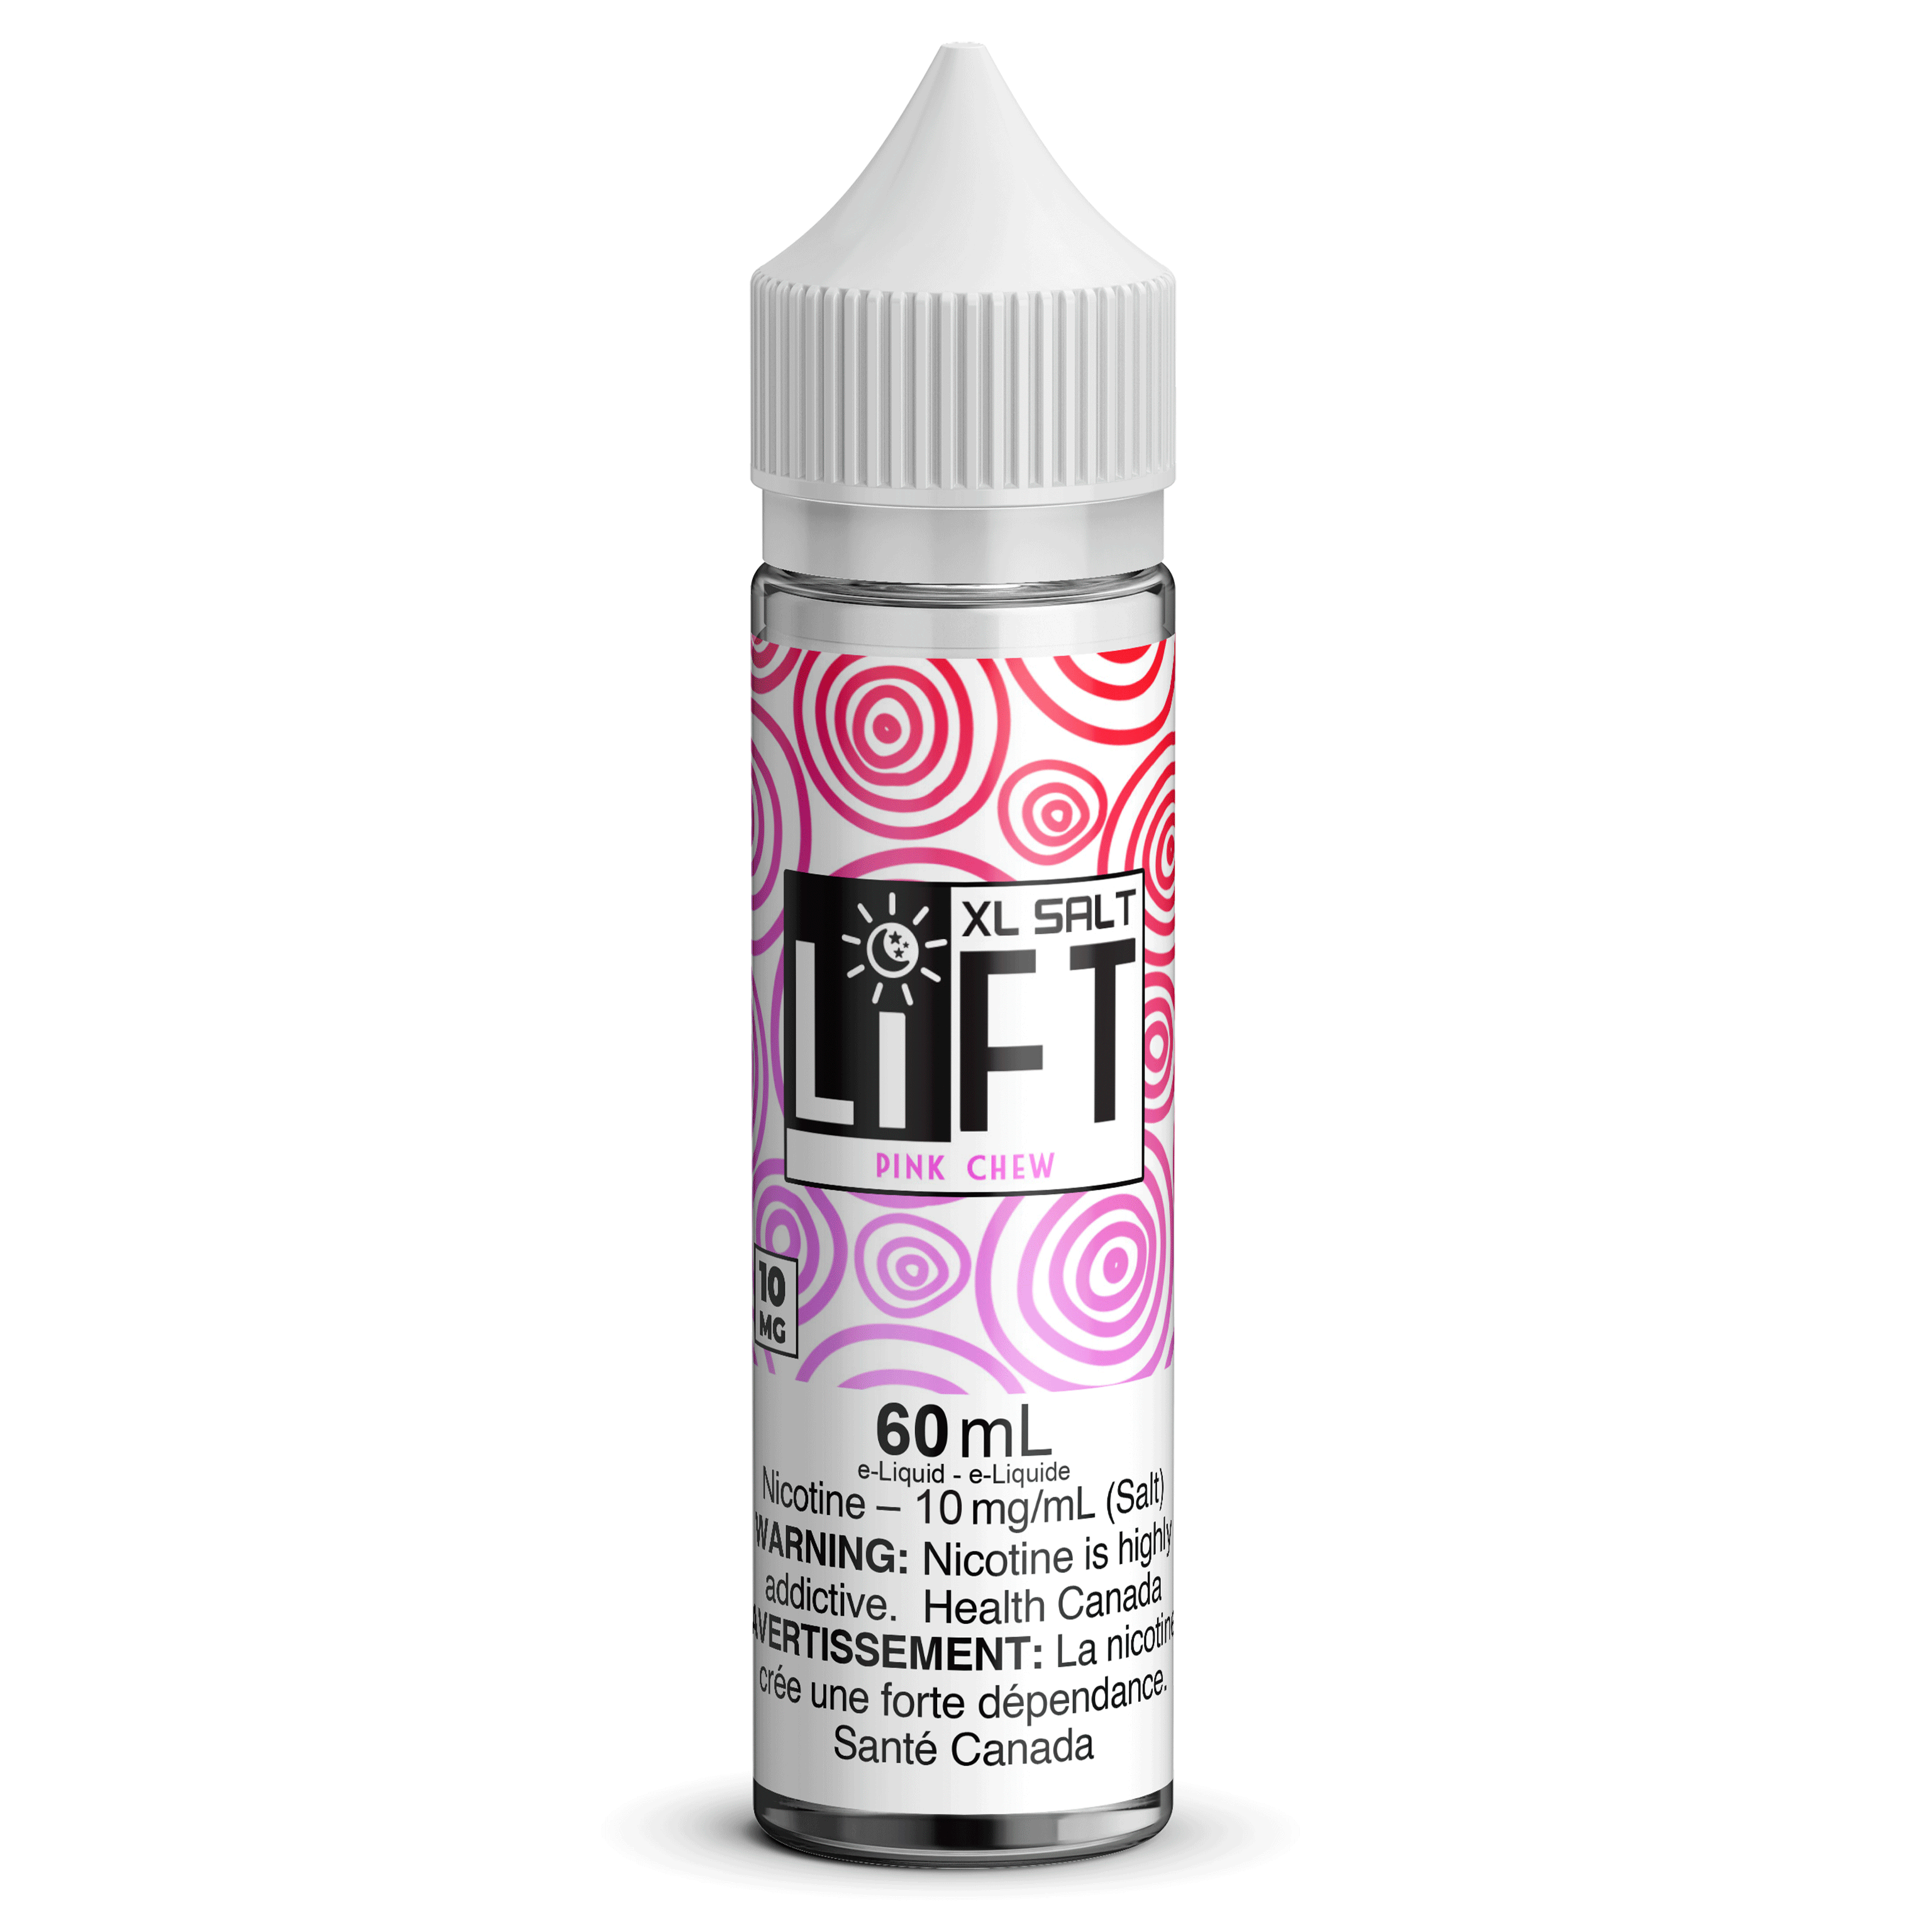 LIFT XL SALT - Pink Chew available on Canada online vape shop